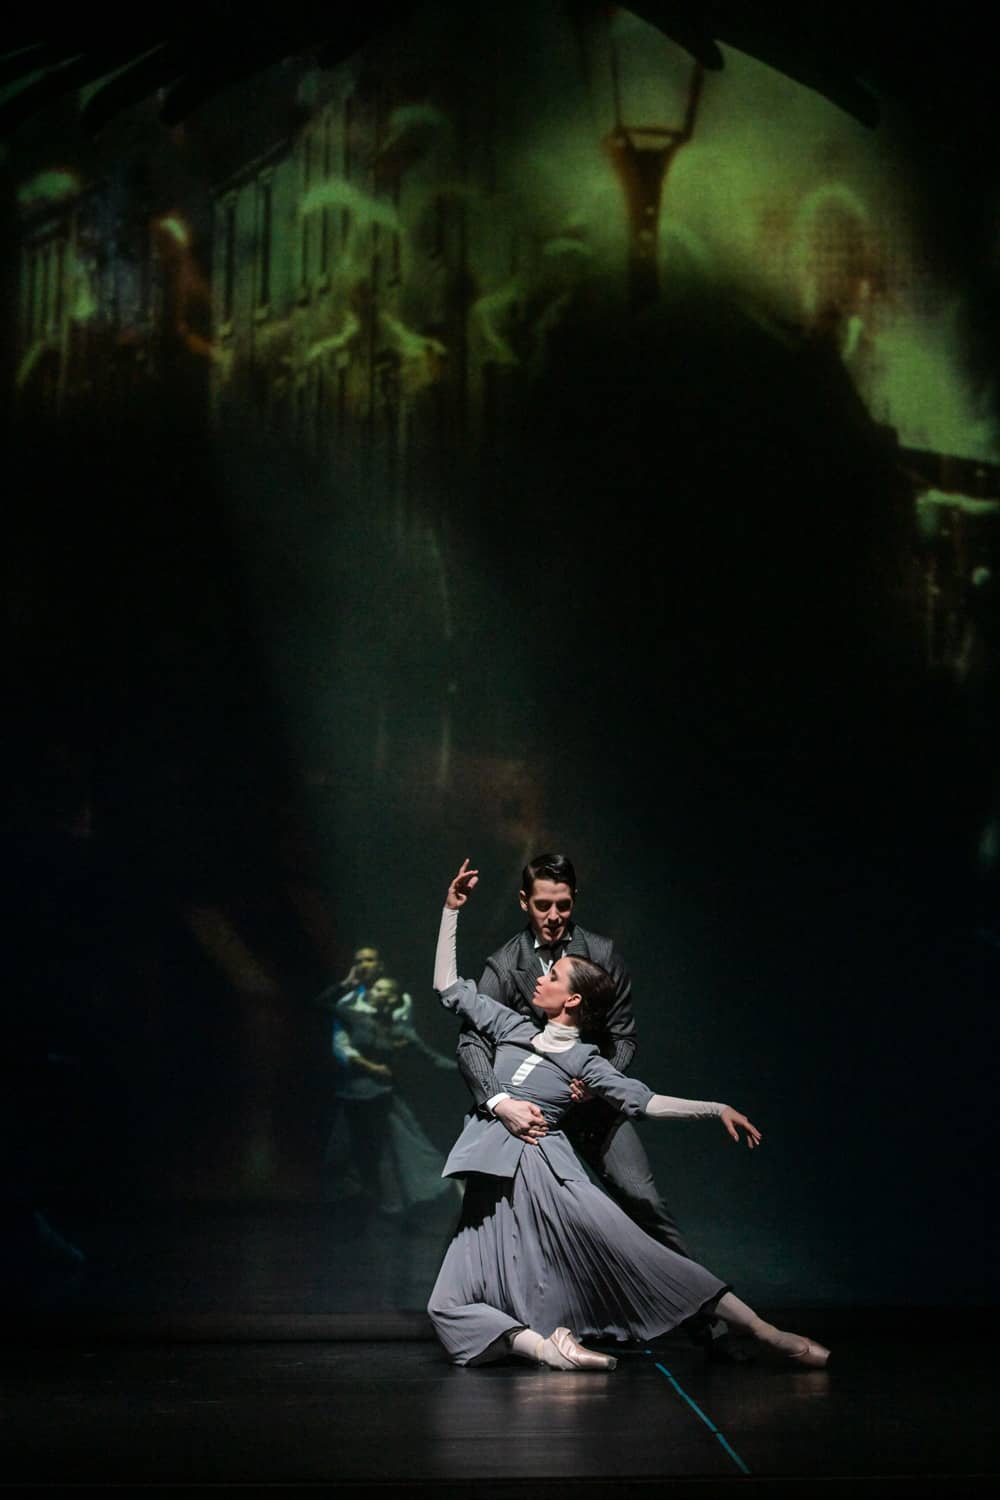 From Dracula's performance. Ph. © Nilz Boehme